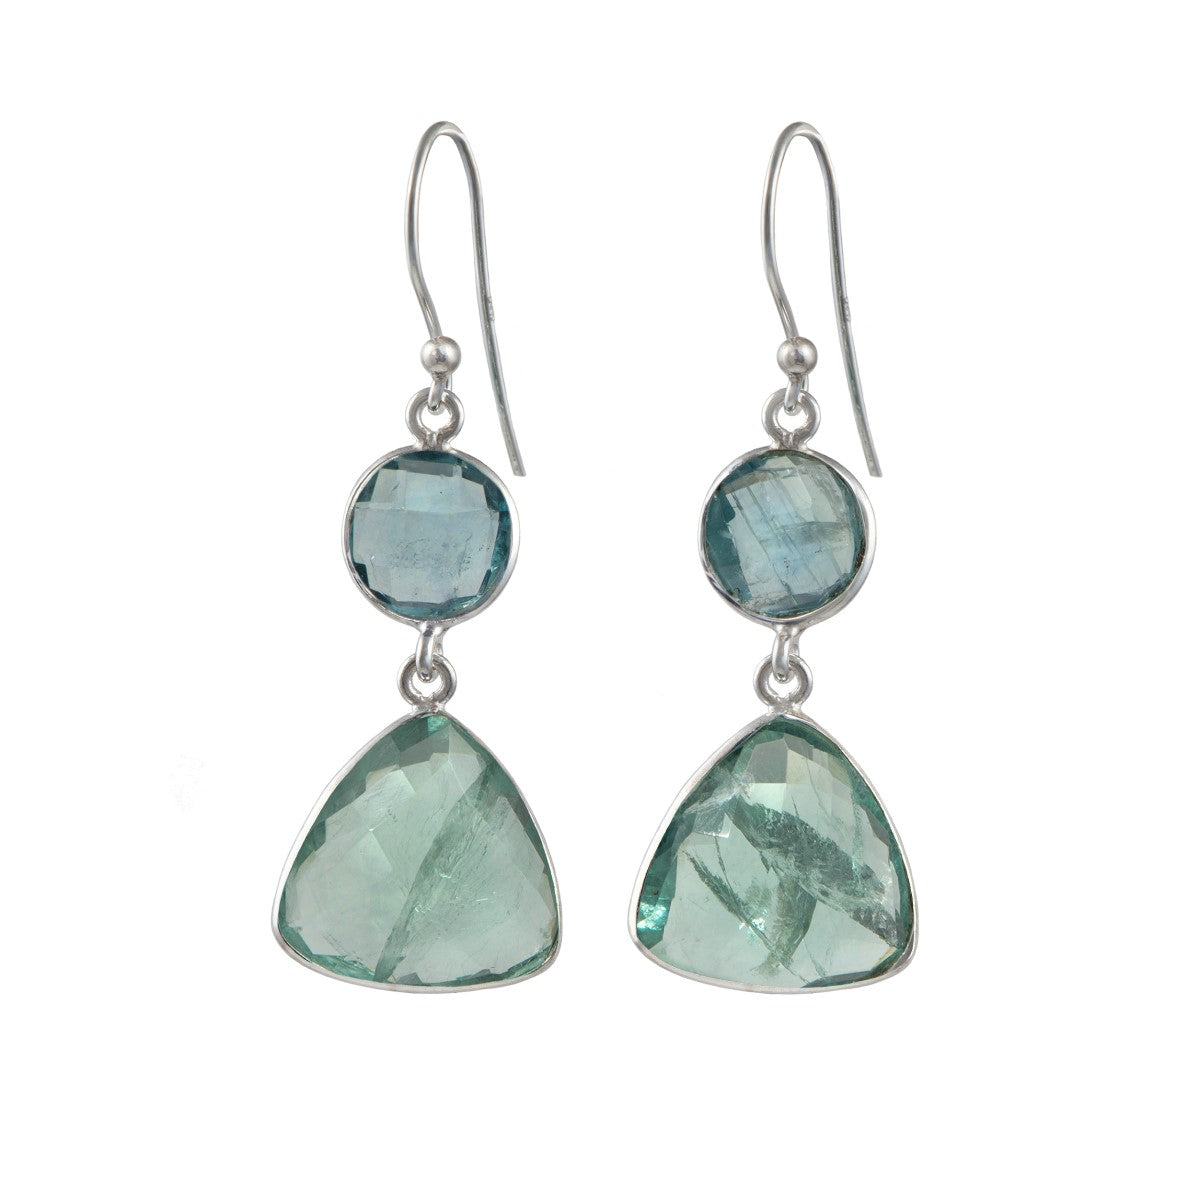 Apatite Gemstone Earrings in Sterling Silver - Triangular